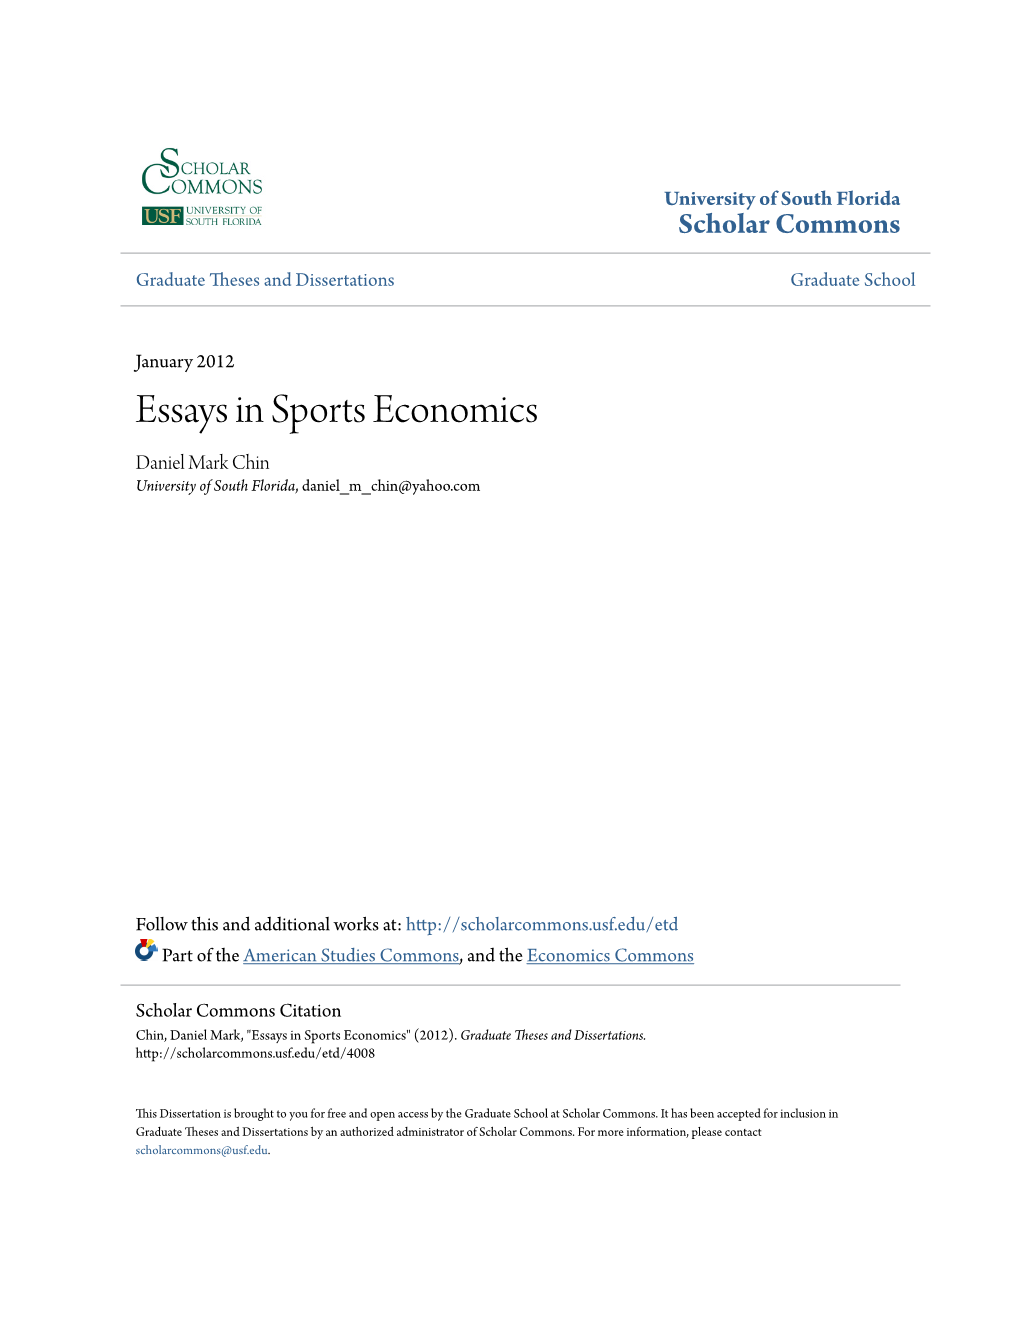 Essays in Sports Economics Daniel Mark Chin University of South Florida, Daniel M Chin@Yahoo.Com